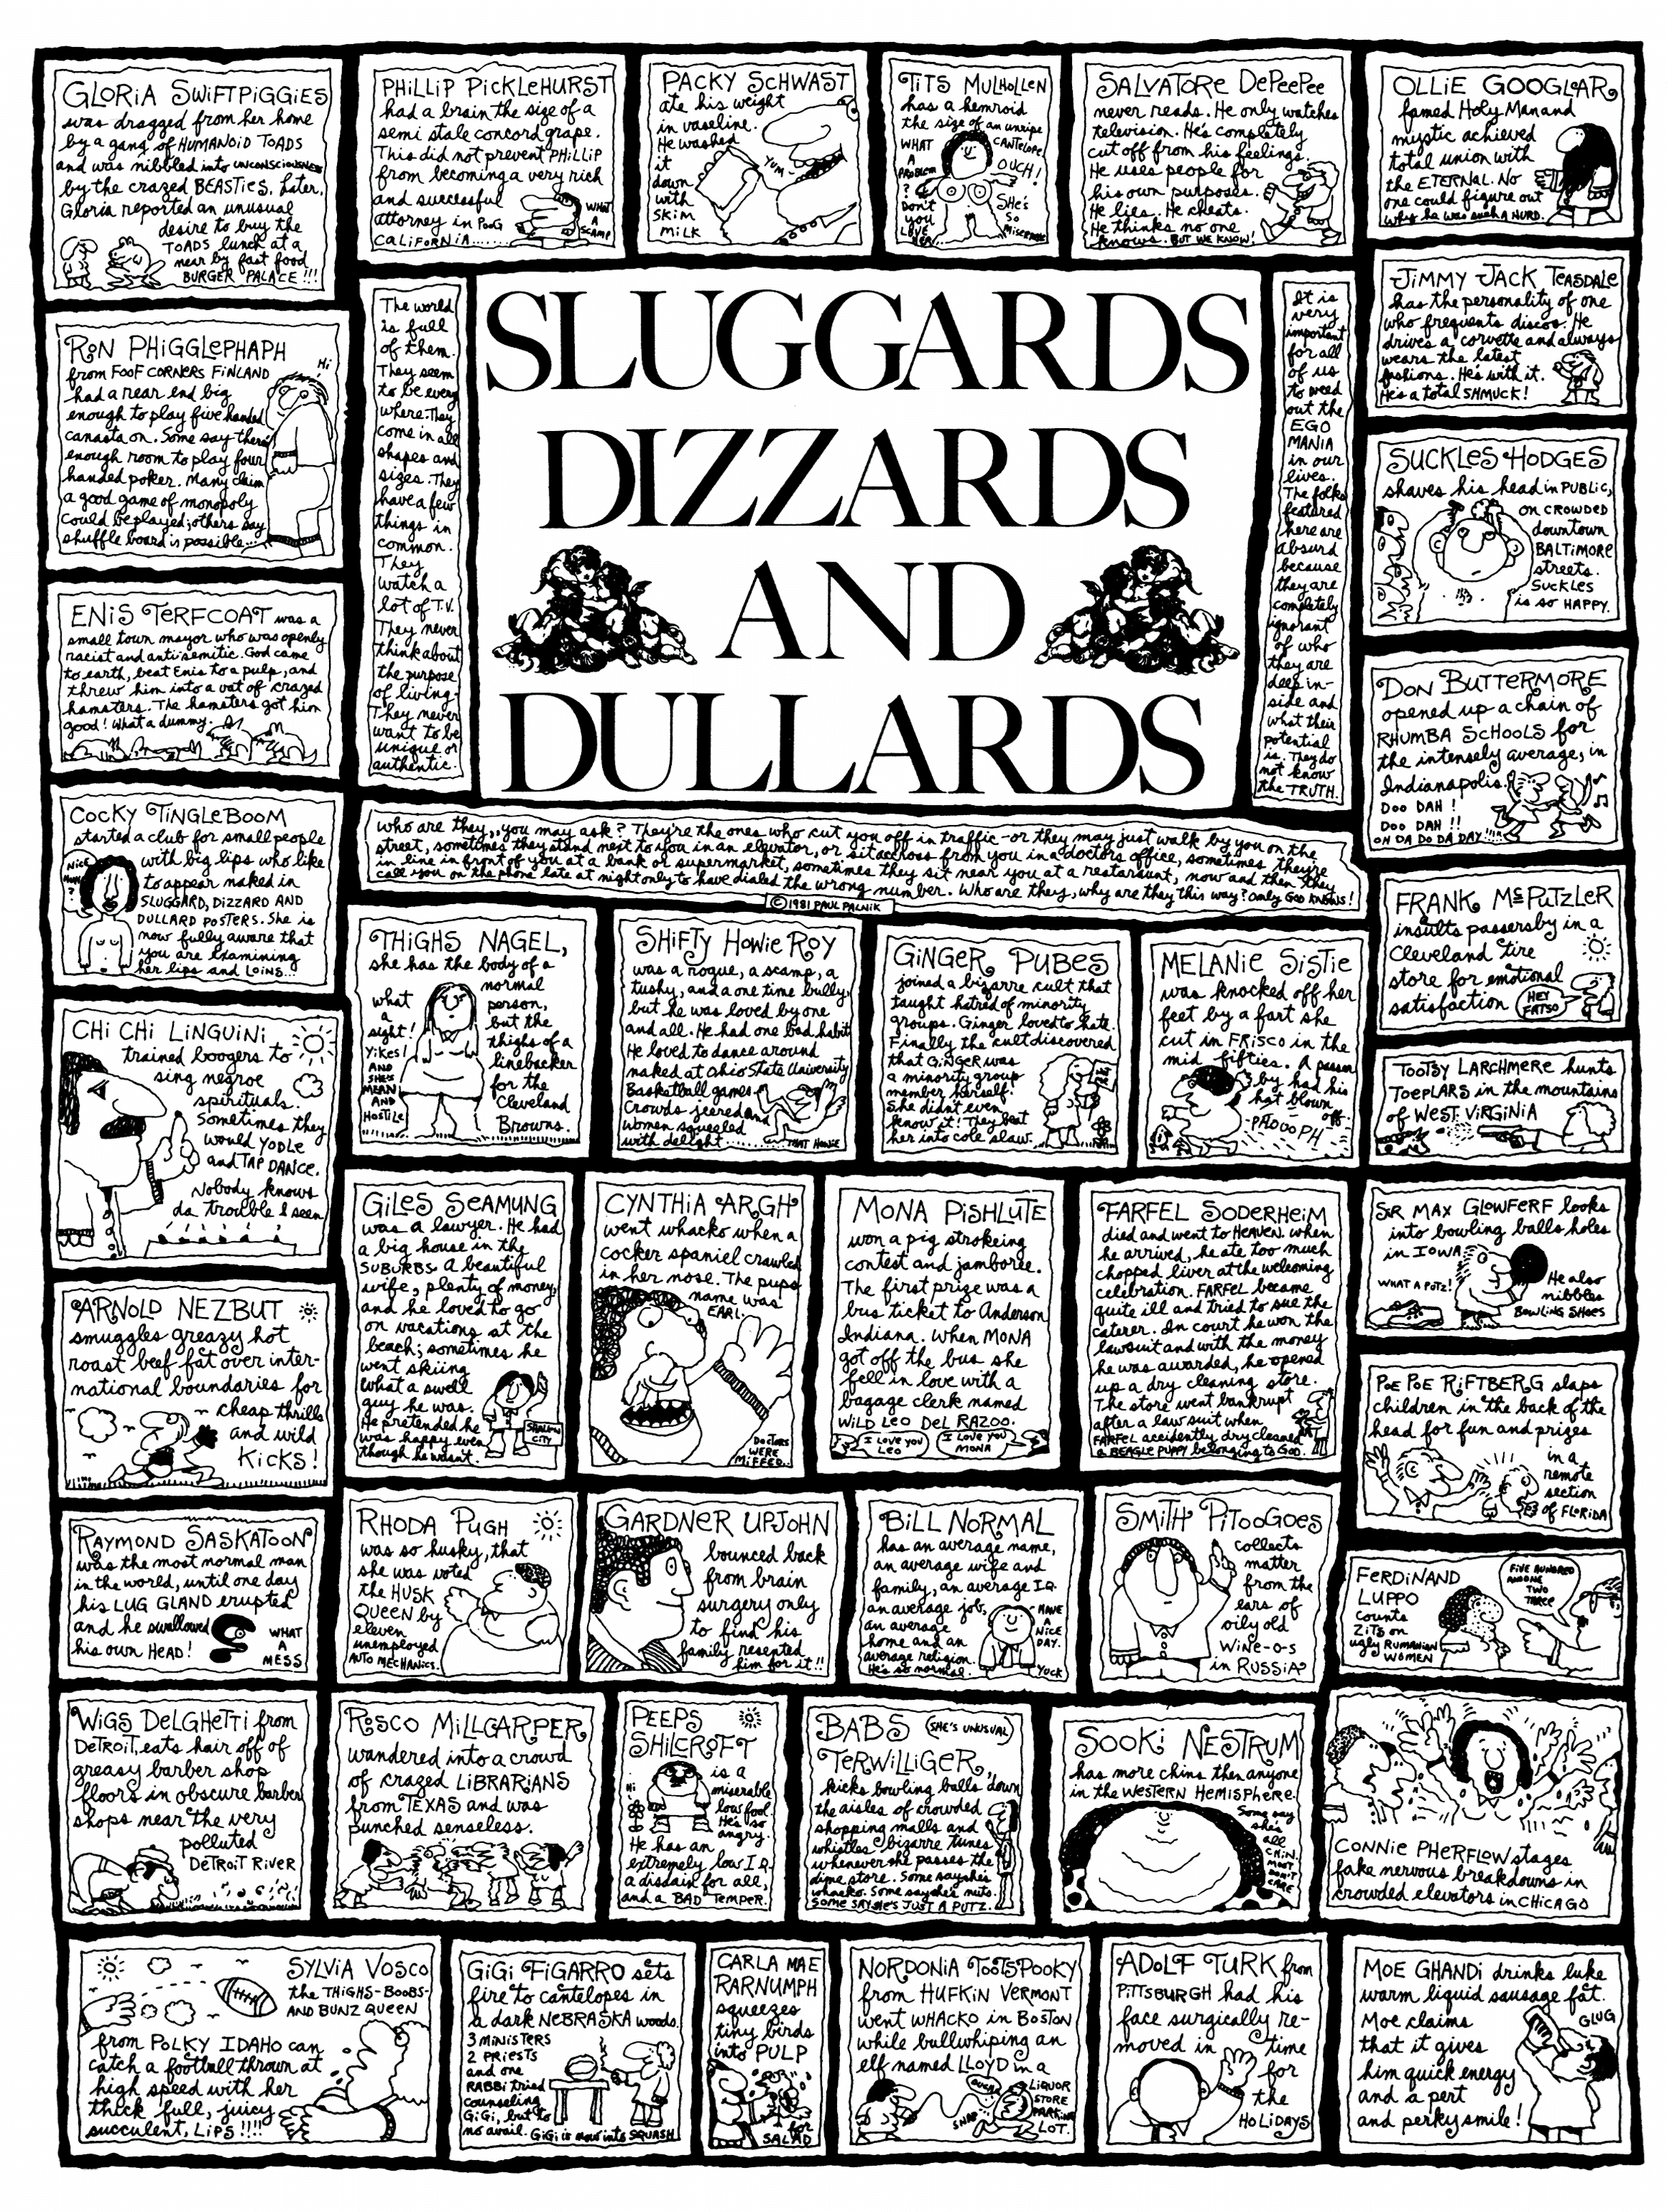 Sluggards - Paul Palnik.png